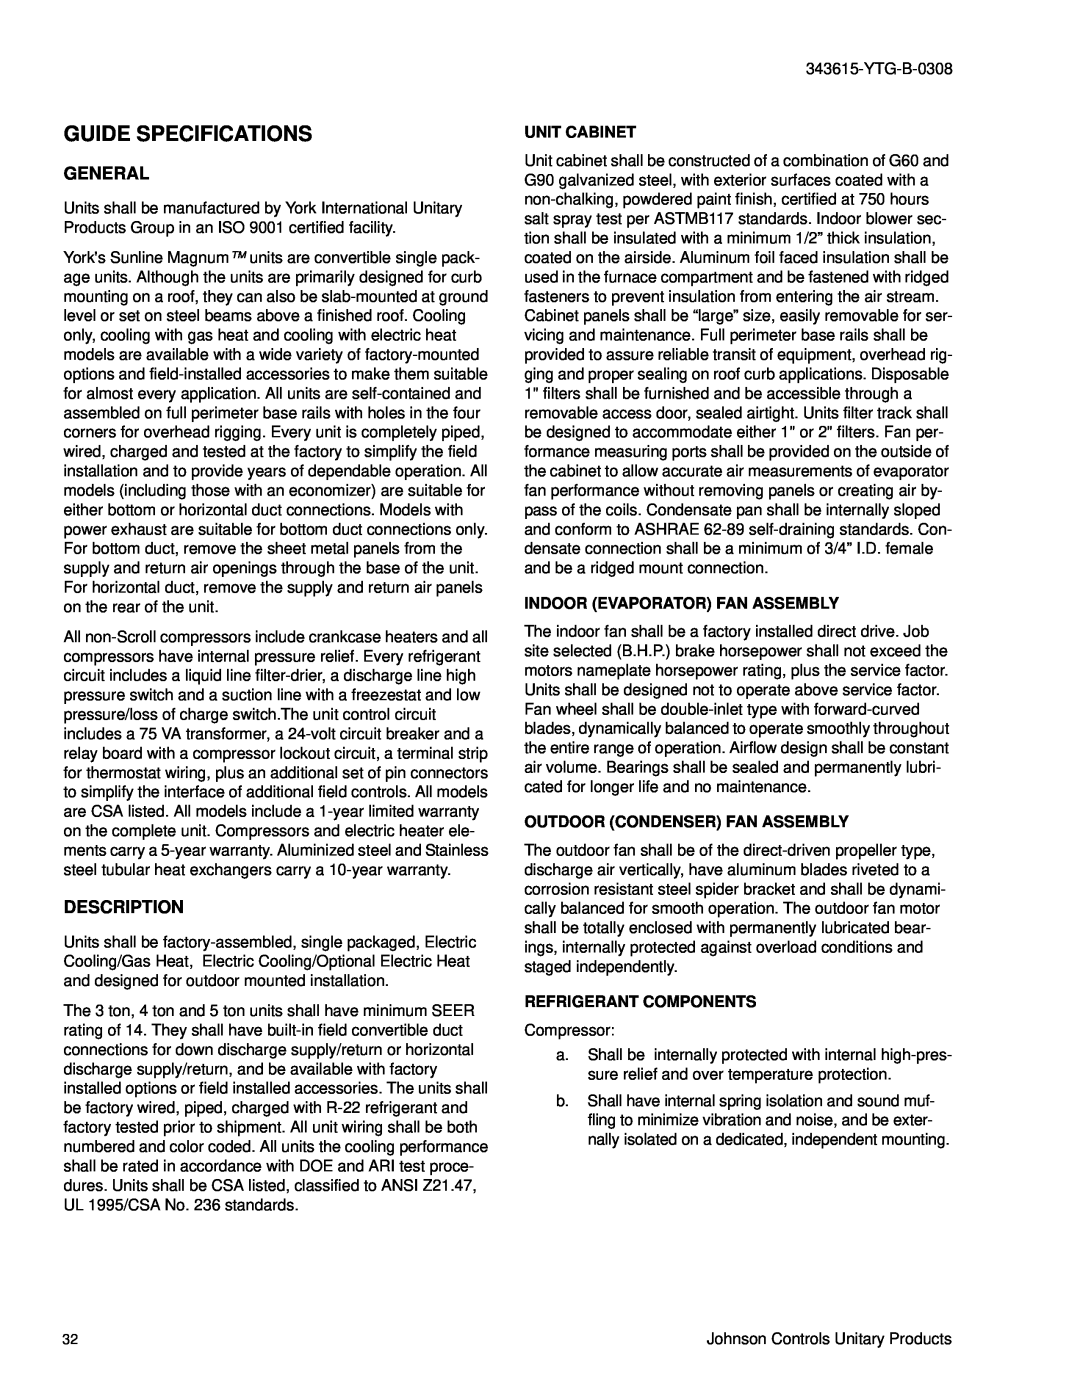 York DY 060, DY 048 warranty Guide Specifications, General, Description 